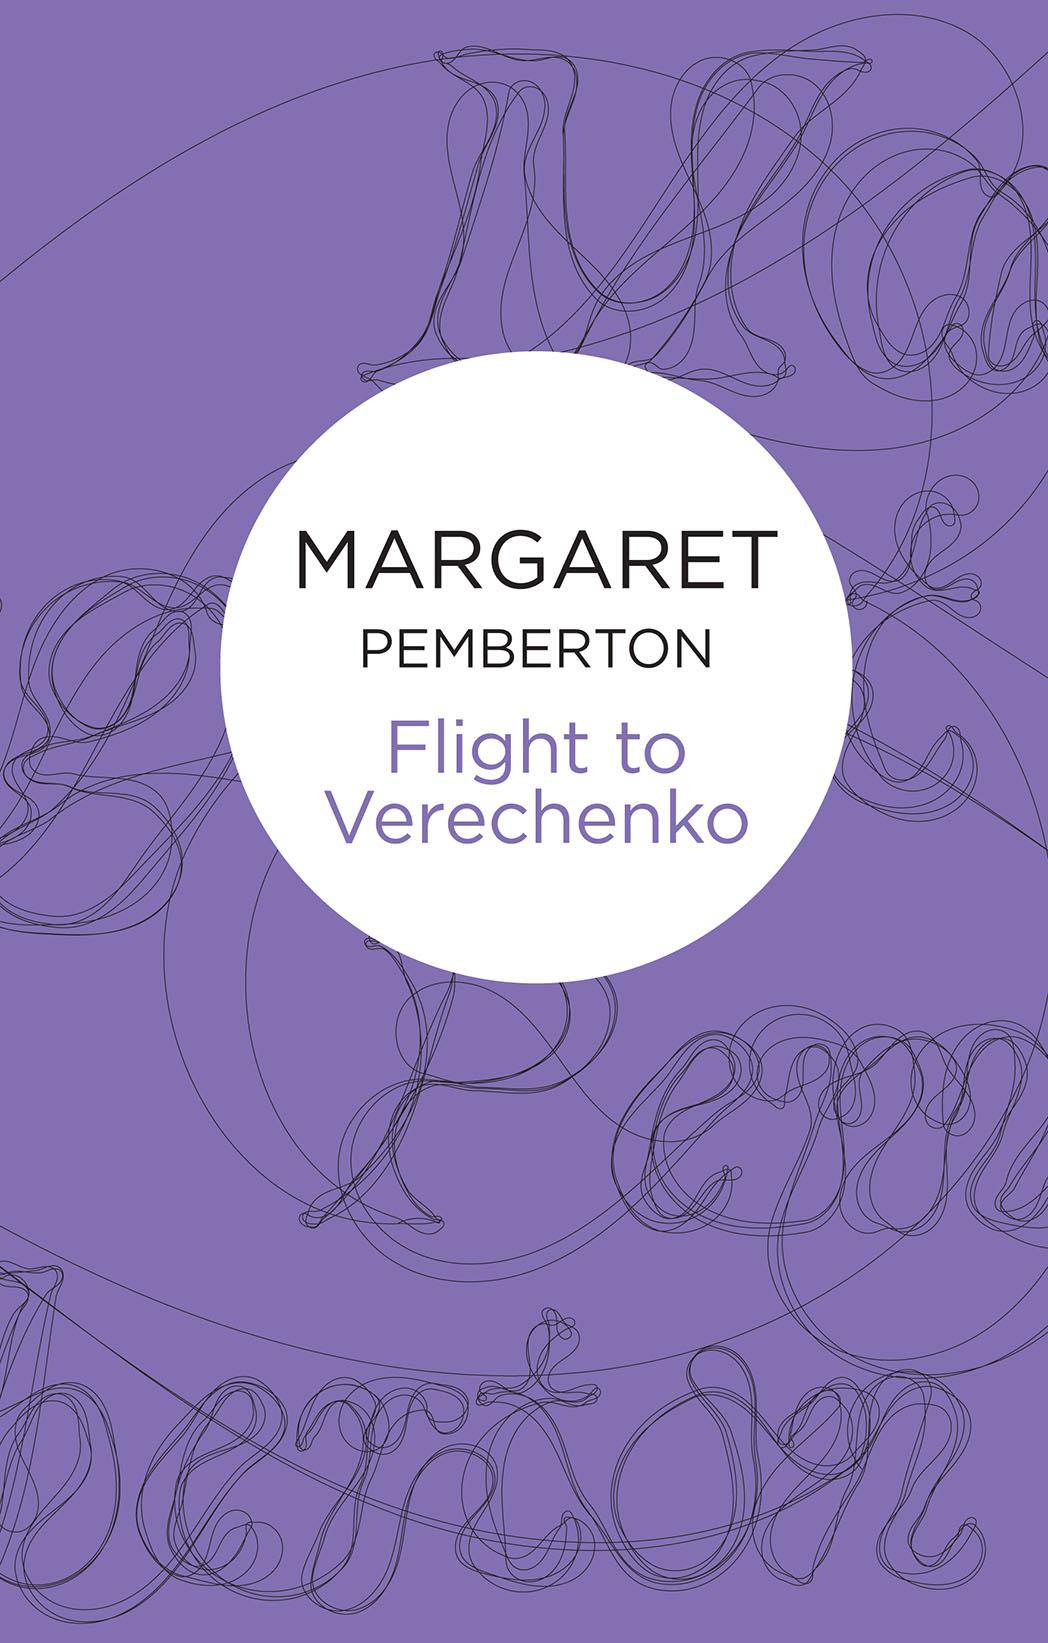 Flight to Verechenko by Margaret Pemberton